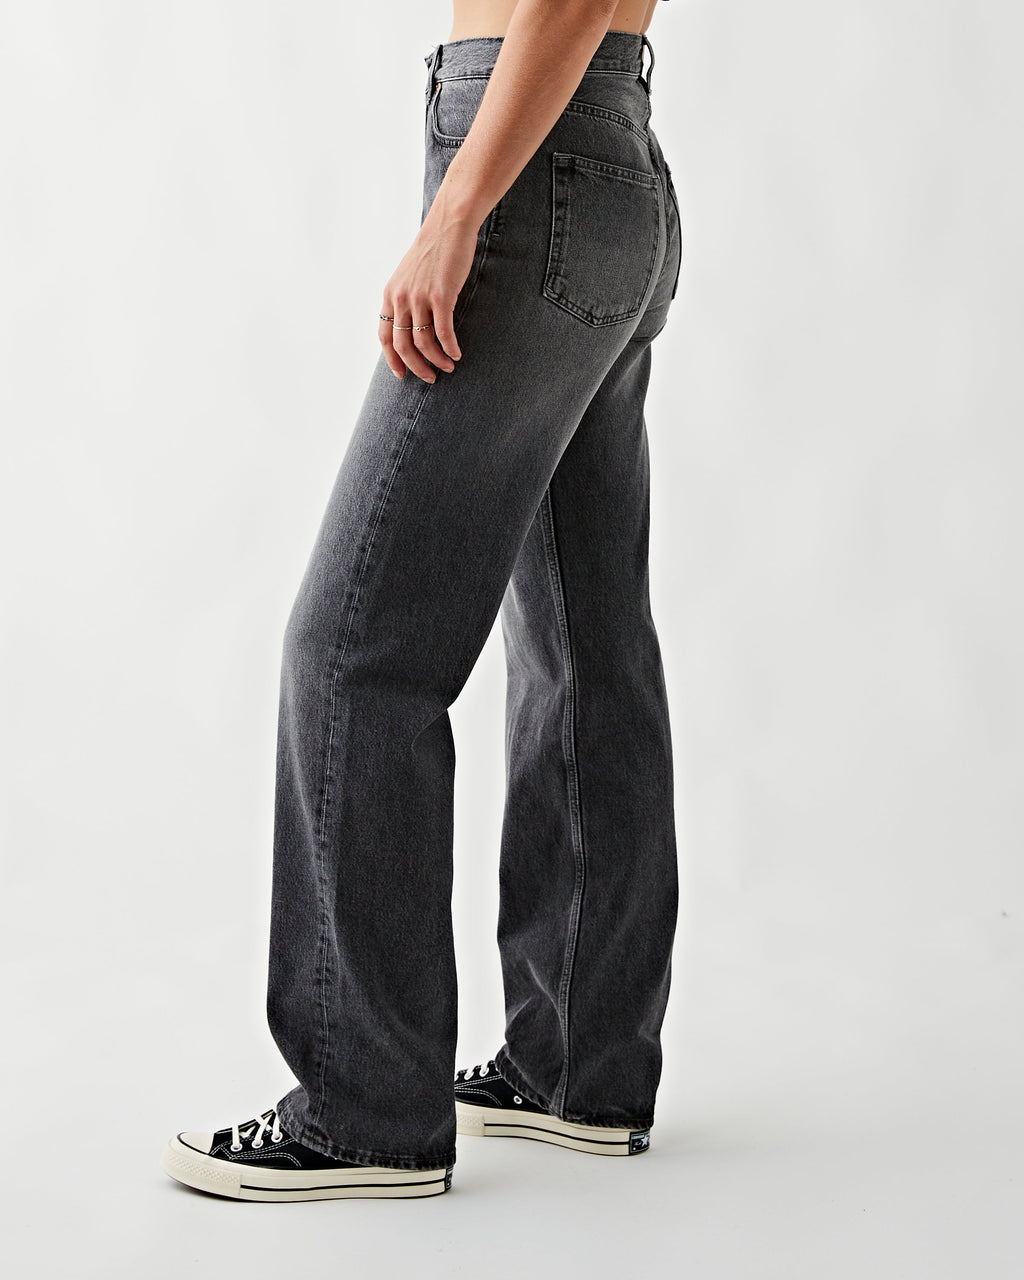 Comprar Calça Jeans Feminina c/cinto-Bi strech 360-LD2101 - Loyal